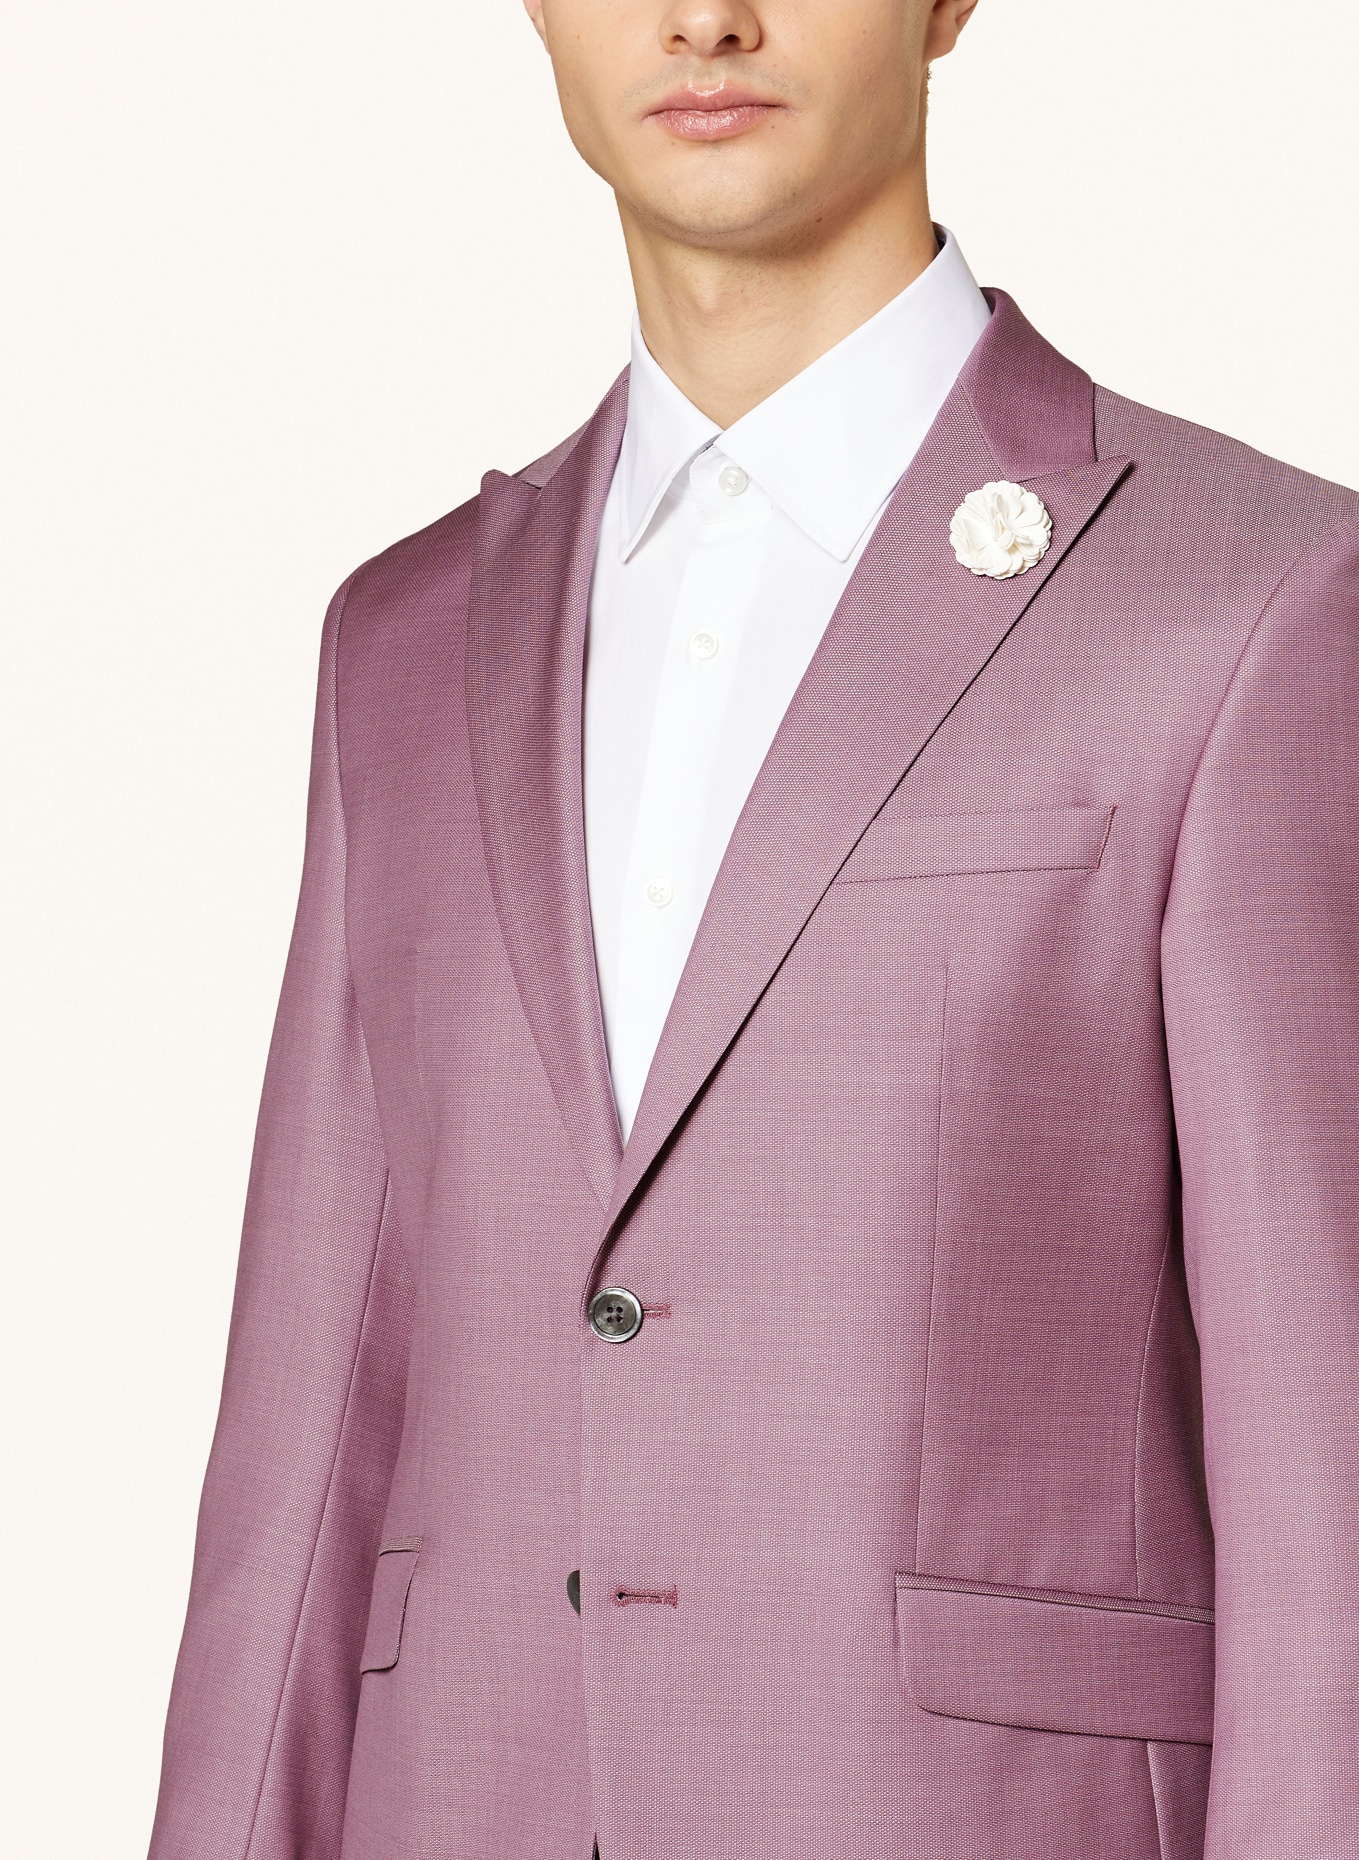 JOOP! Suit jacket HAWKER slim fit, Color: 650 Dark Pink                  650 (Image 5)